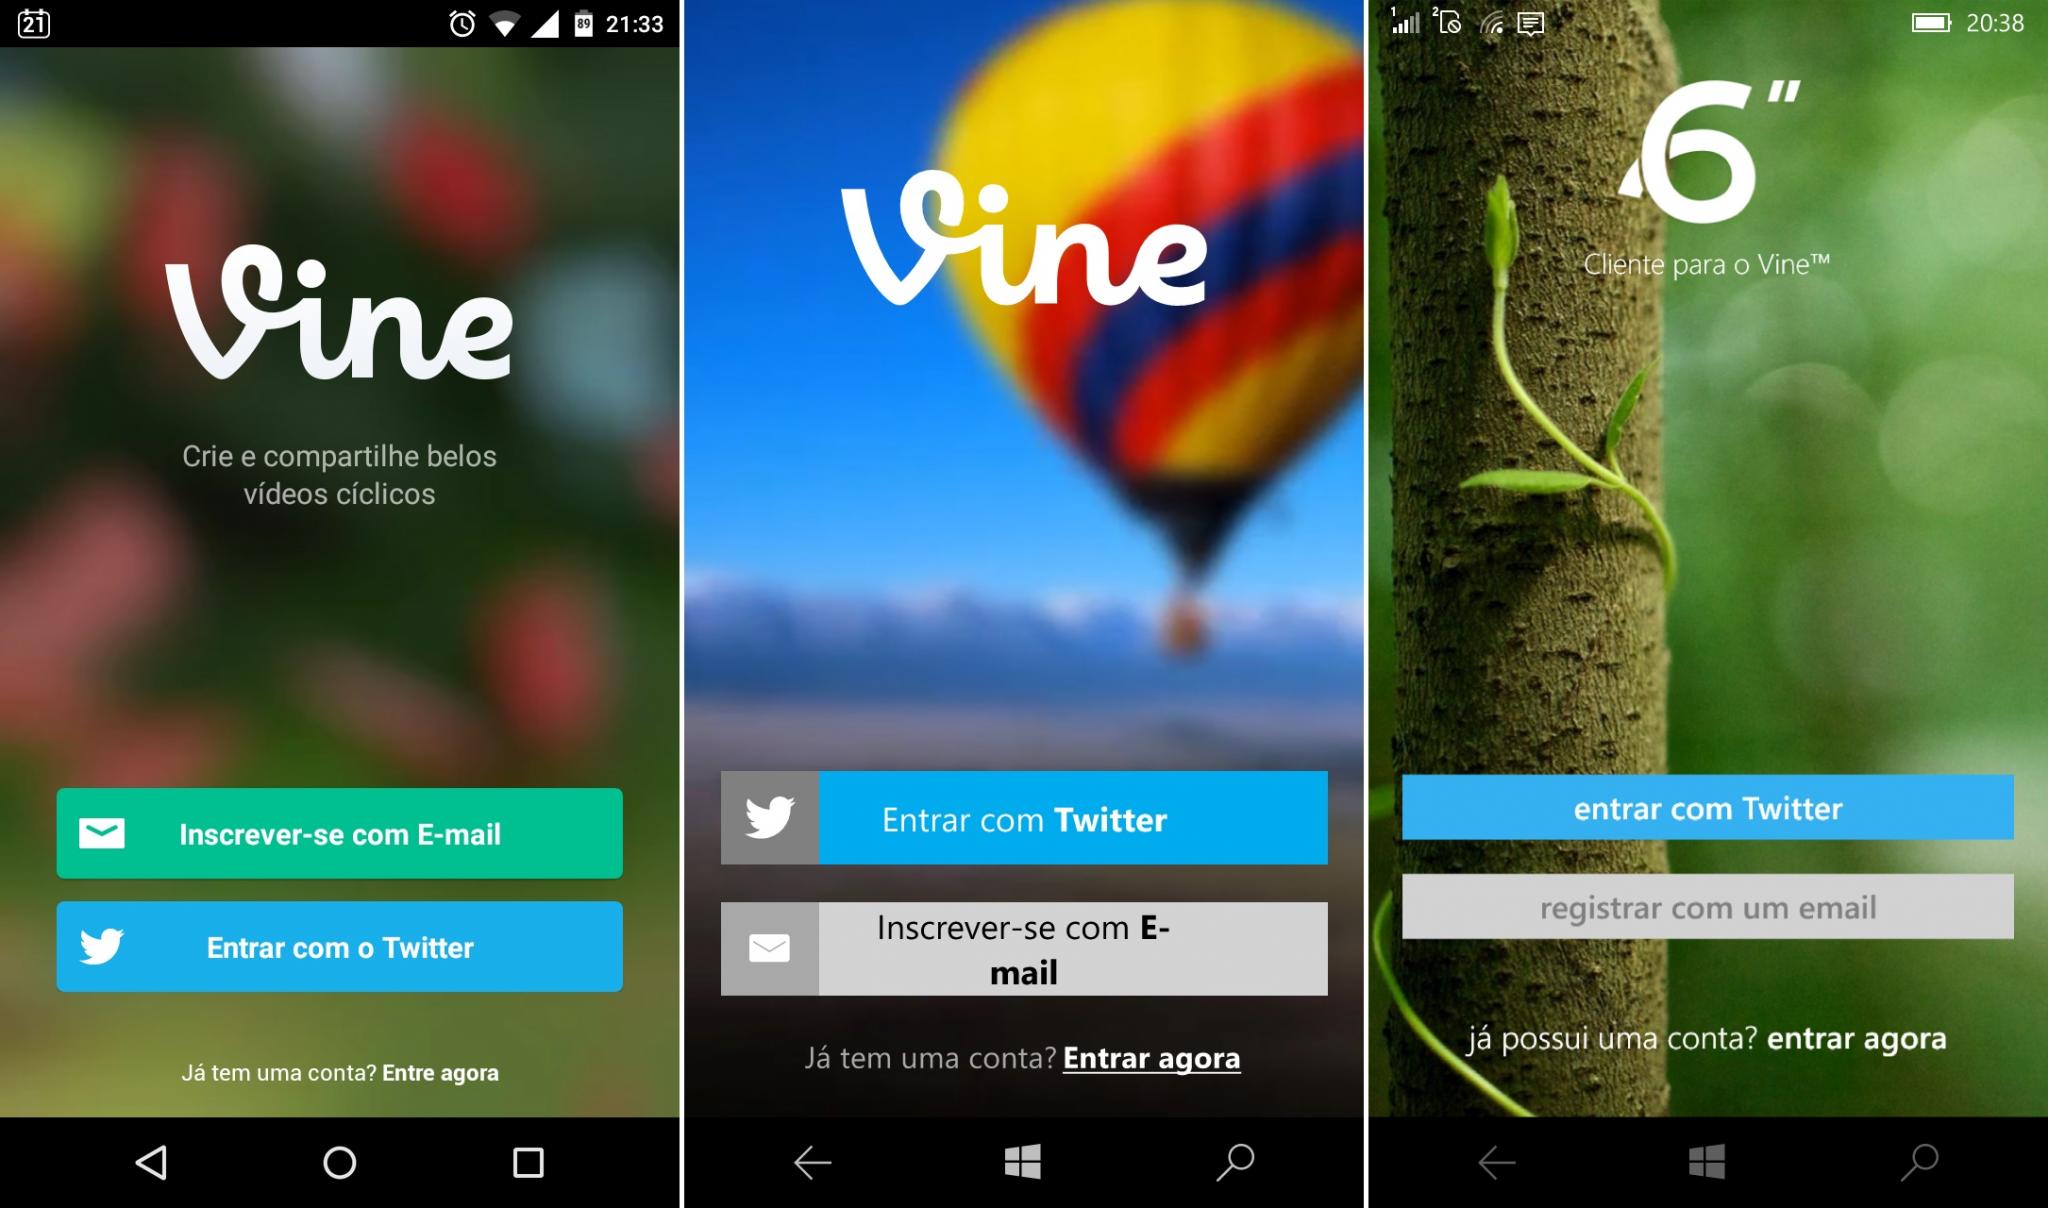 Comparativo de apps #10 - vine -1